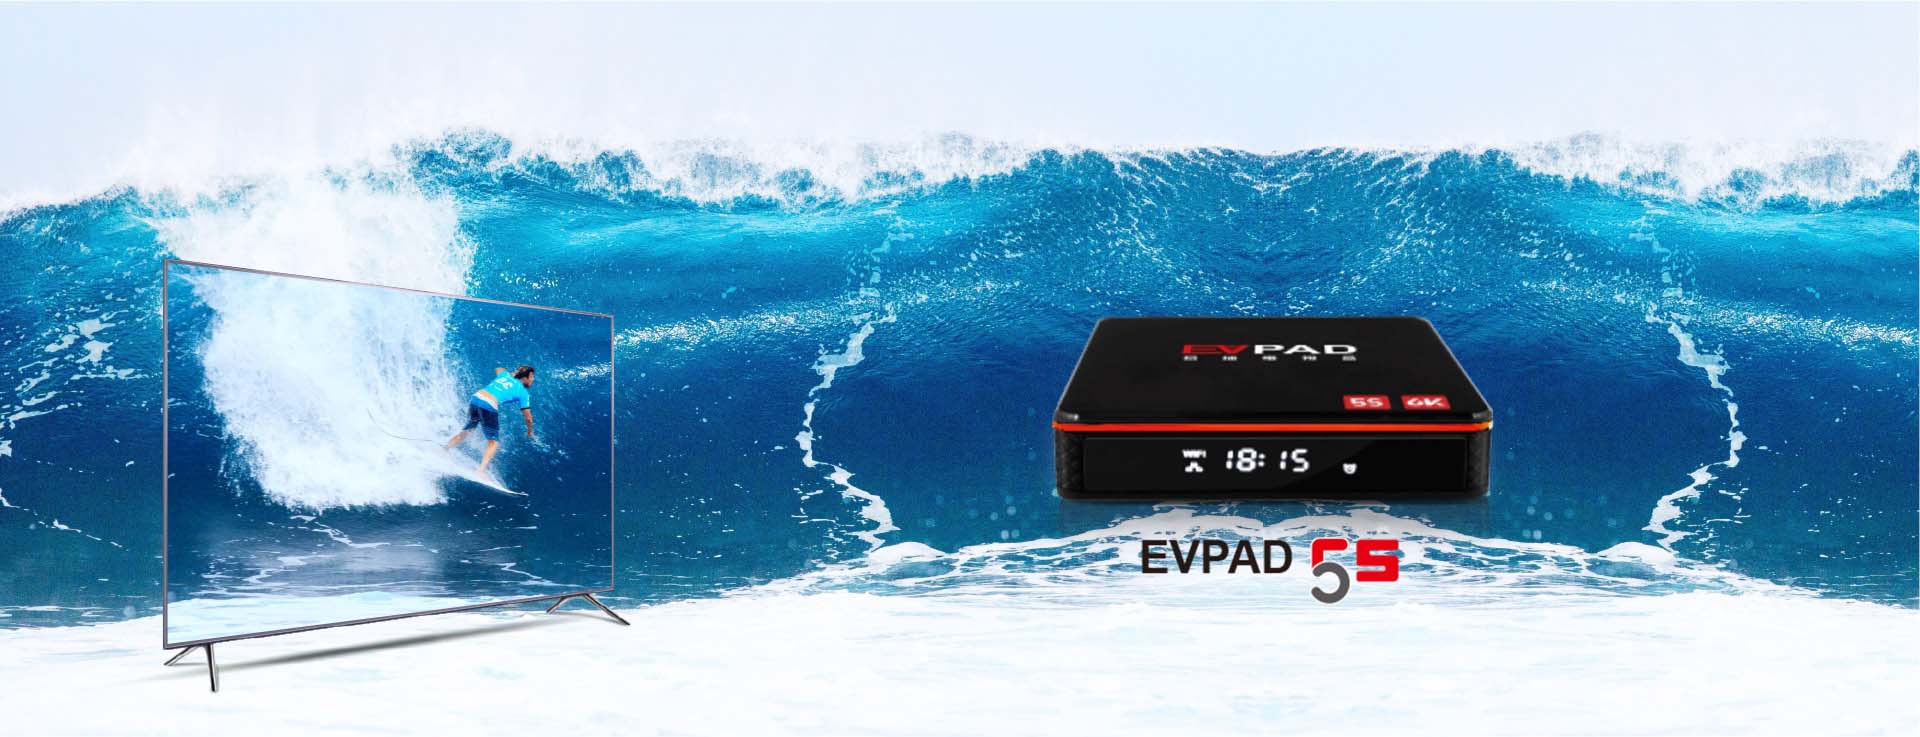 EVPAD 5S - กล่อง AI TV ที่เปิดใช้งานด้วยเสียงครั้งแรกของโลก